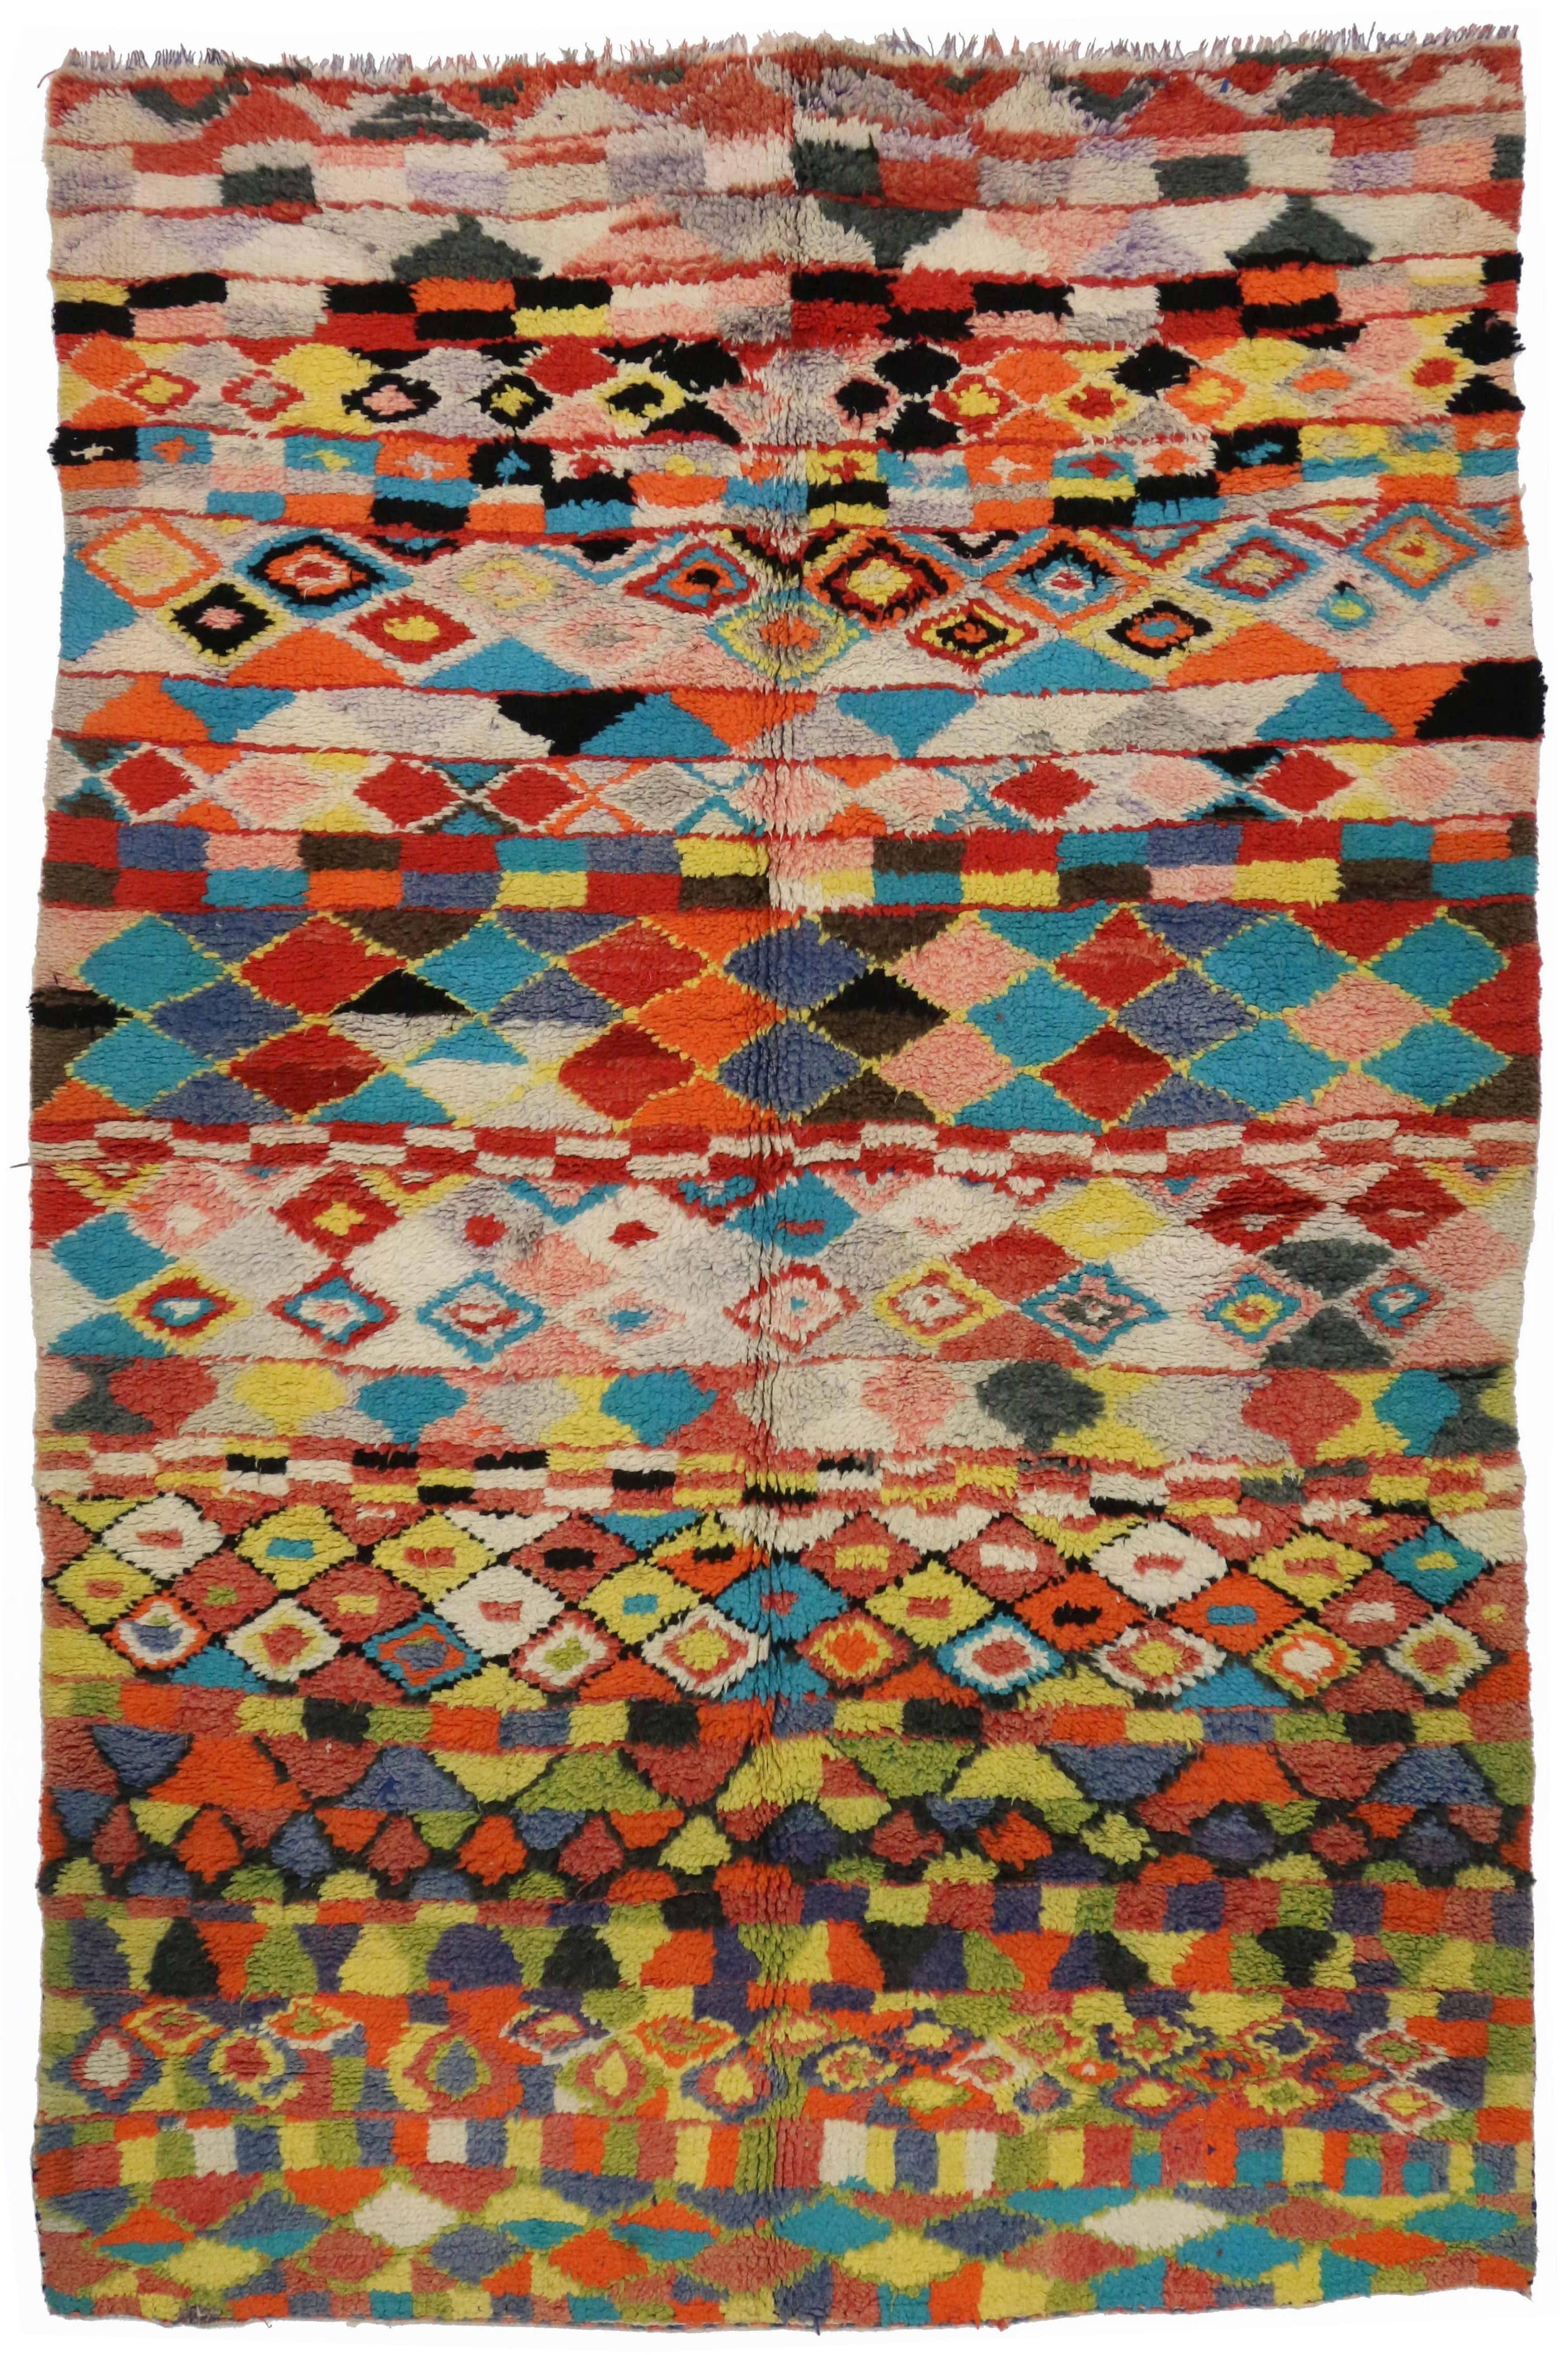 Vintage Moroccan Rug with Contemporary Abstract Design, Berber Moroccan Rug 1